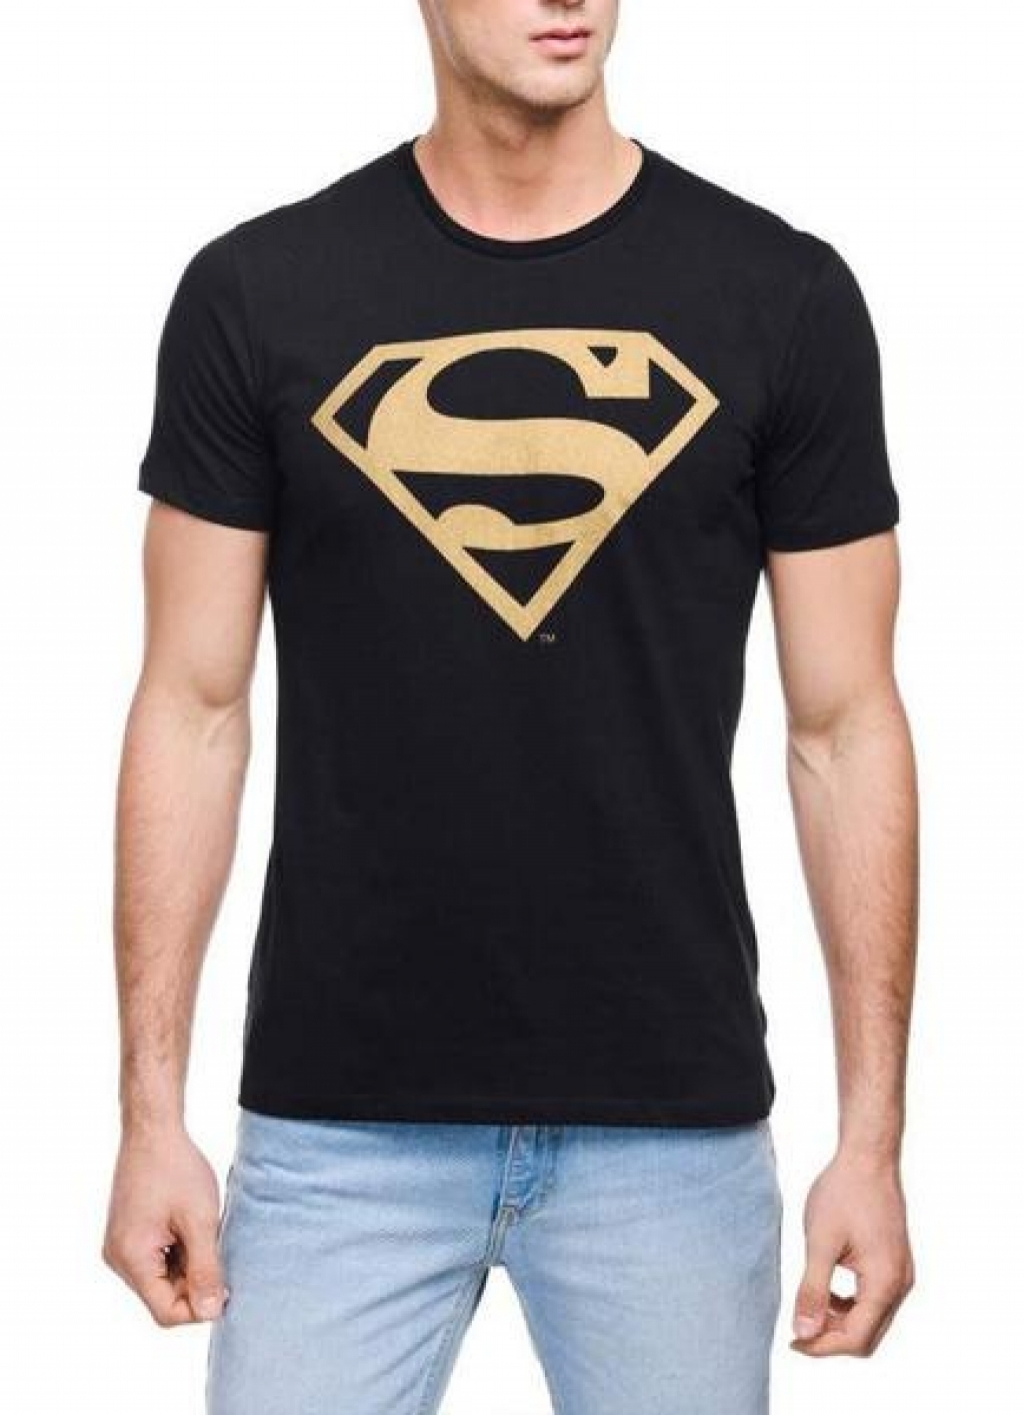 superman t shirt online pakistan